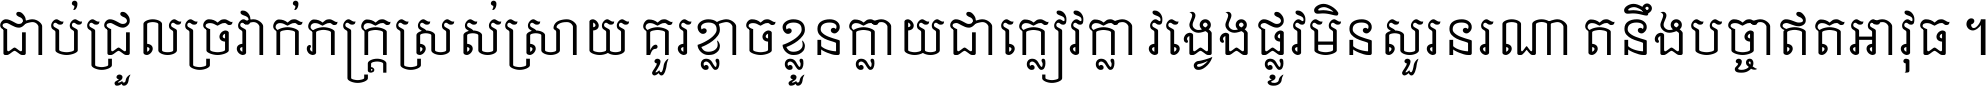 Khmer Mondulkiri K